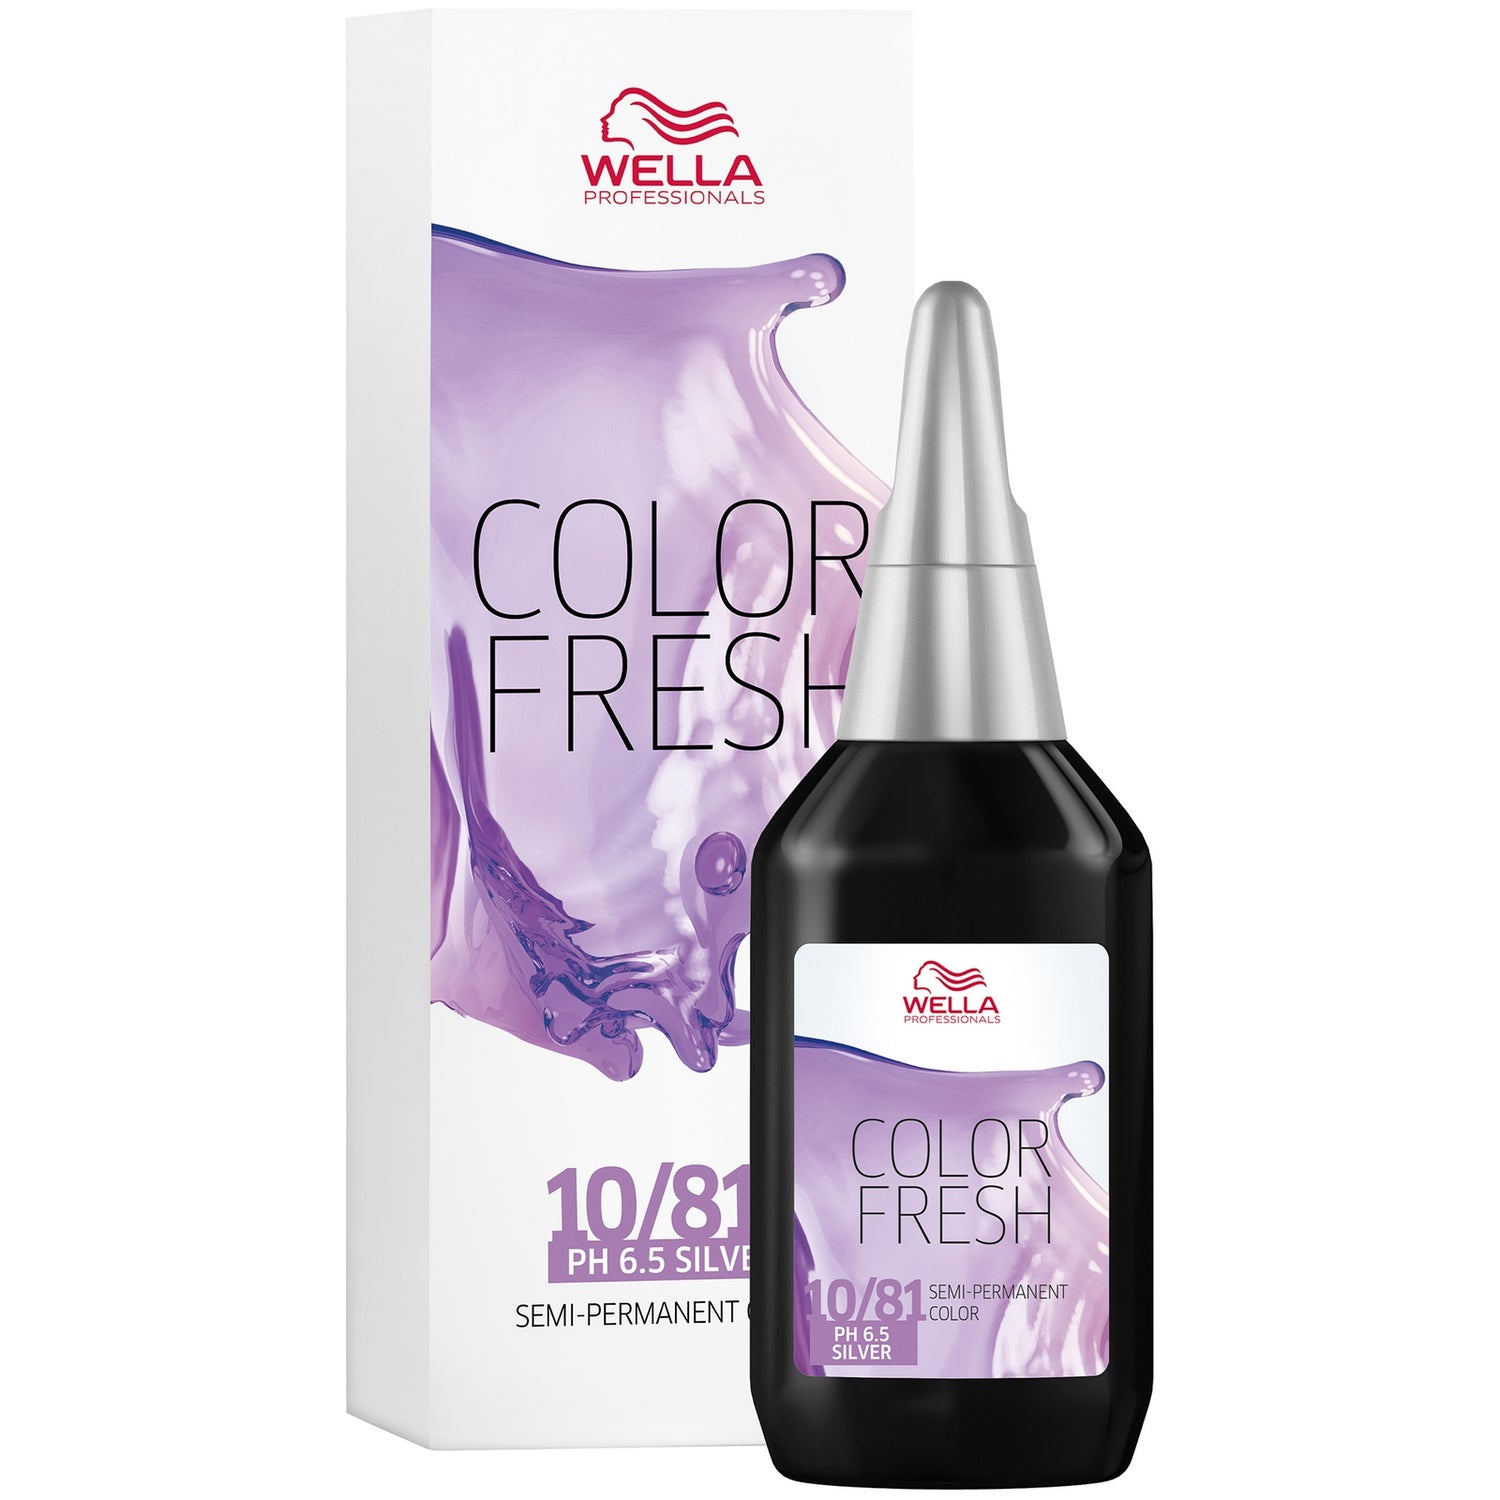 Wella Professionals Color Fresh Semi-Permanent Colour - 10/81 Very Light Pearl Ash Blonde 75ml